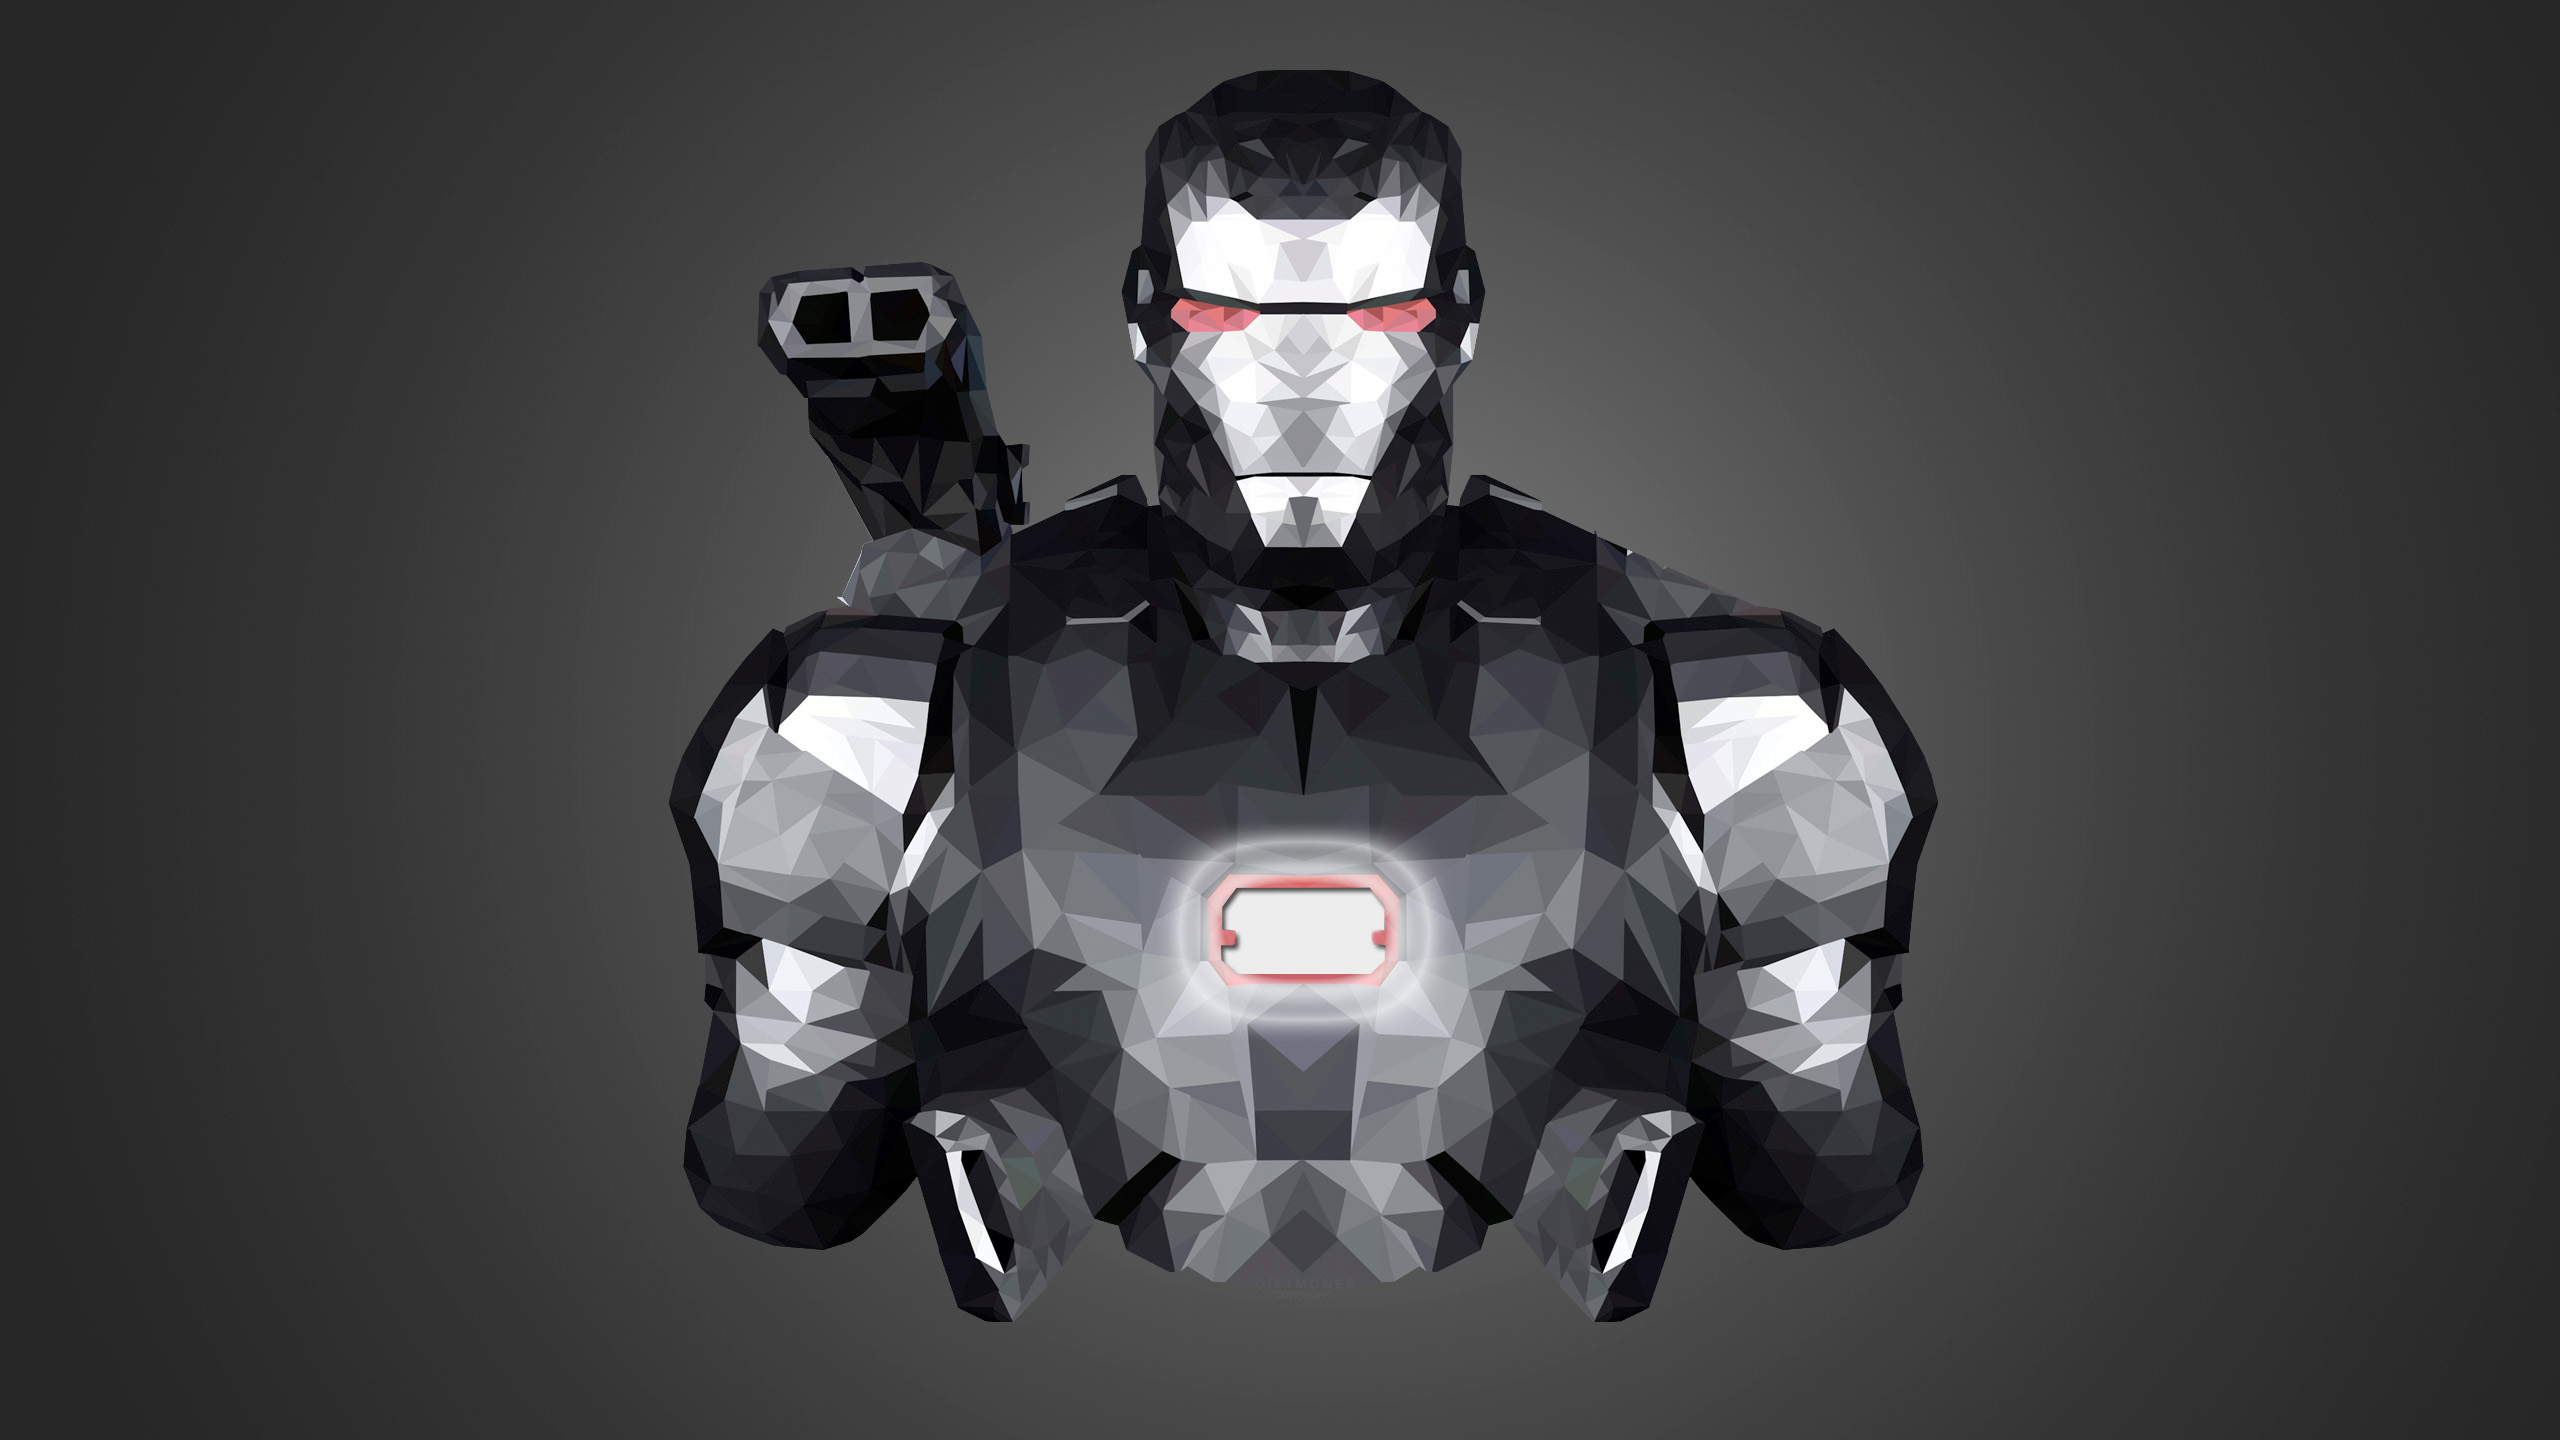 General 2560x1440 War Machine  Iron Man armor low poly minimalism comics fictional character Marvel Comics frontal view digital art simple background